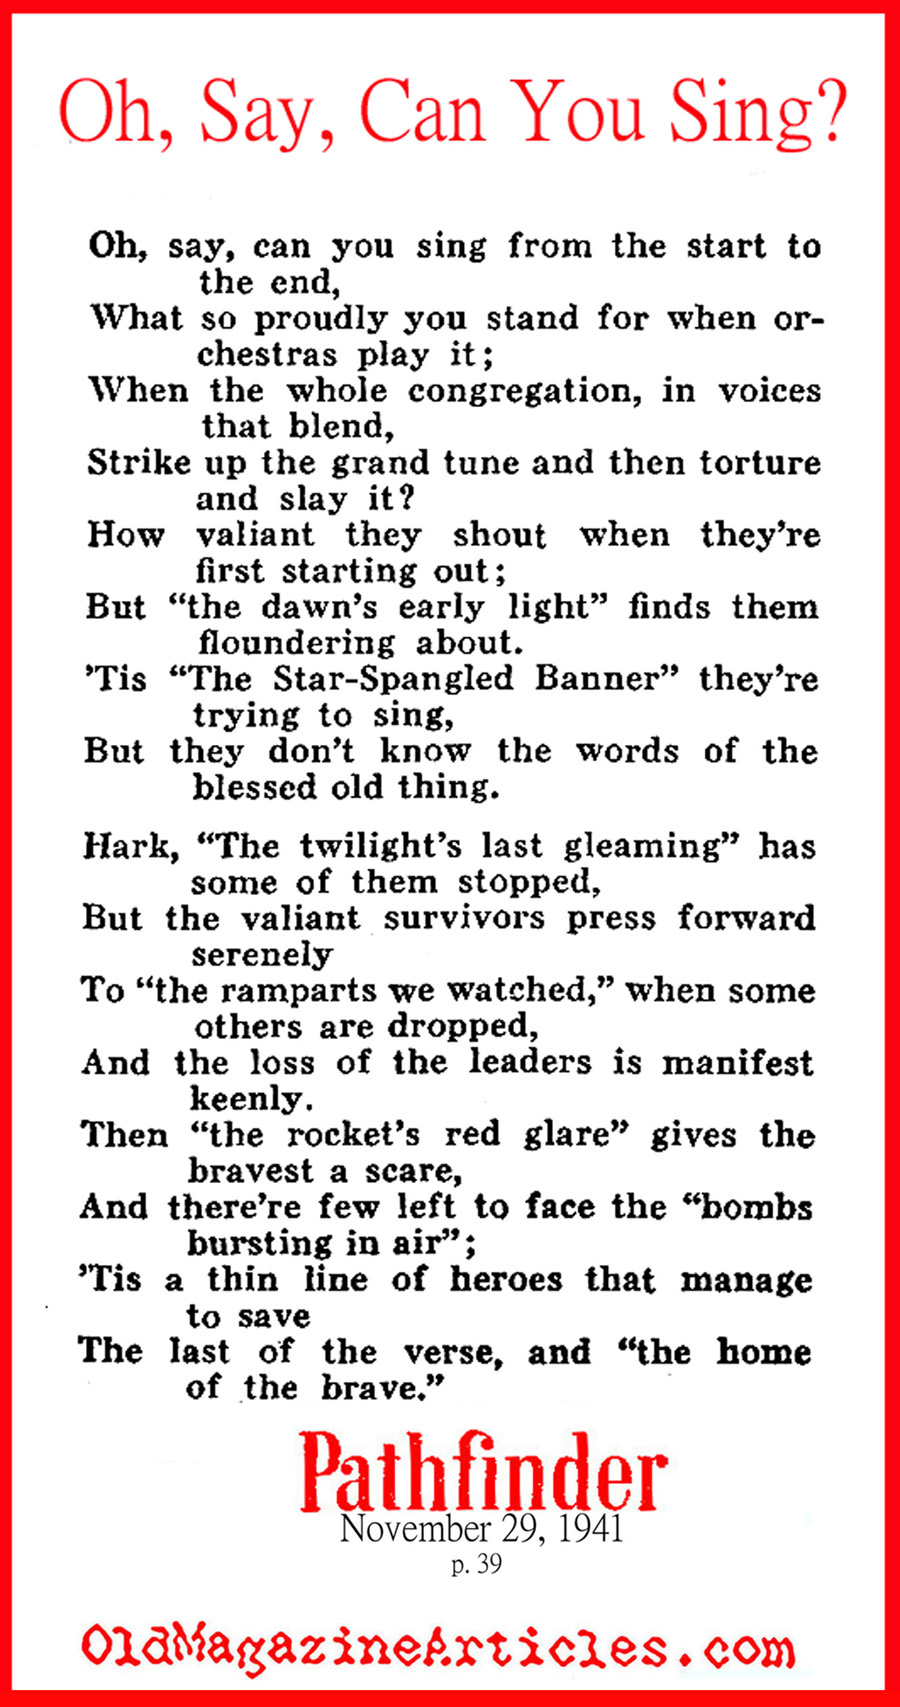 Alternative Lyrics for the National Anthem (Pathfinder, 1941)